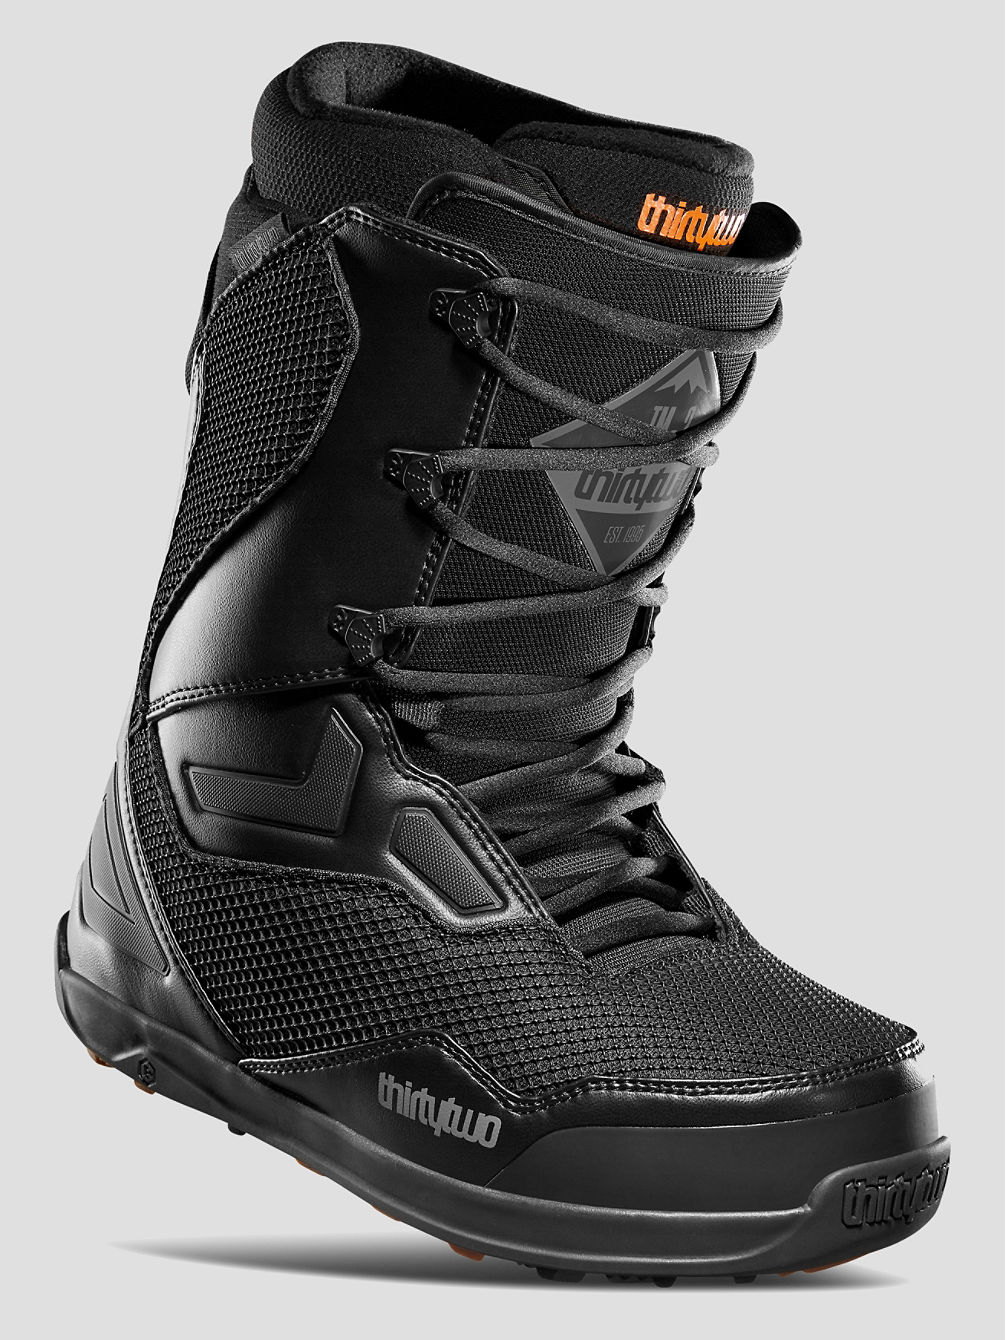 TM 2 Snowboard Boots